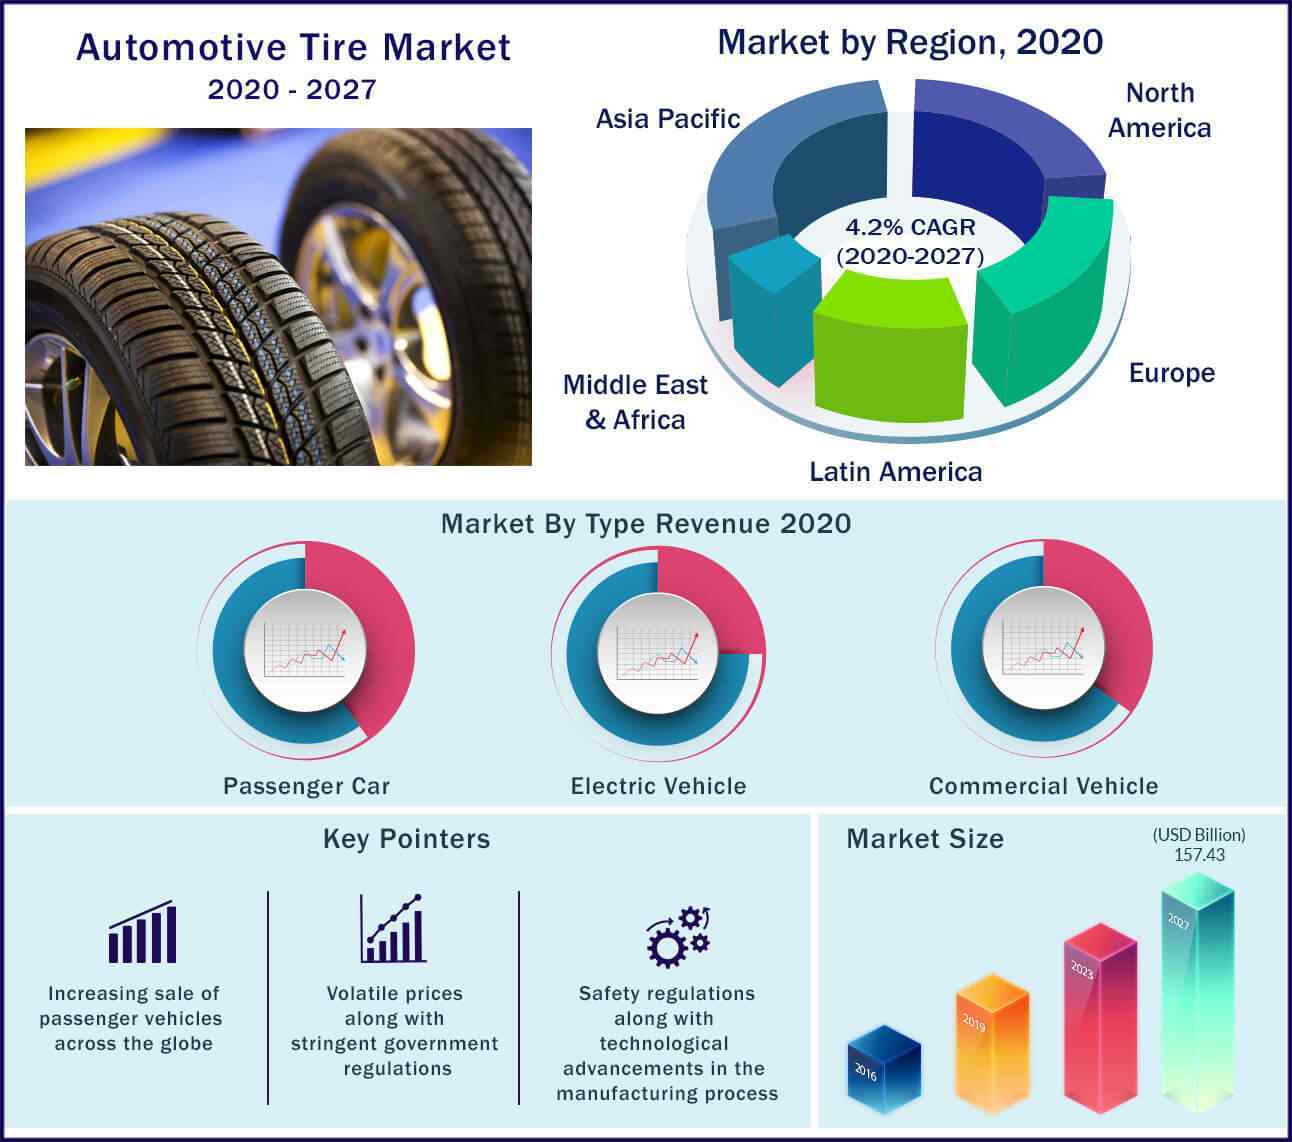 Automotive Tire Market to Hit US 157.43 Billion by 2027